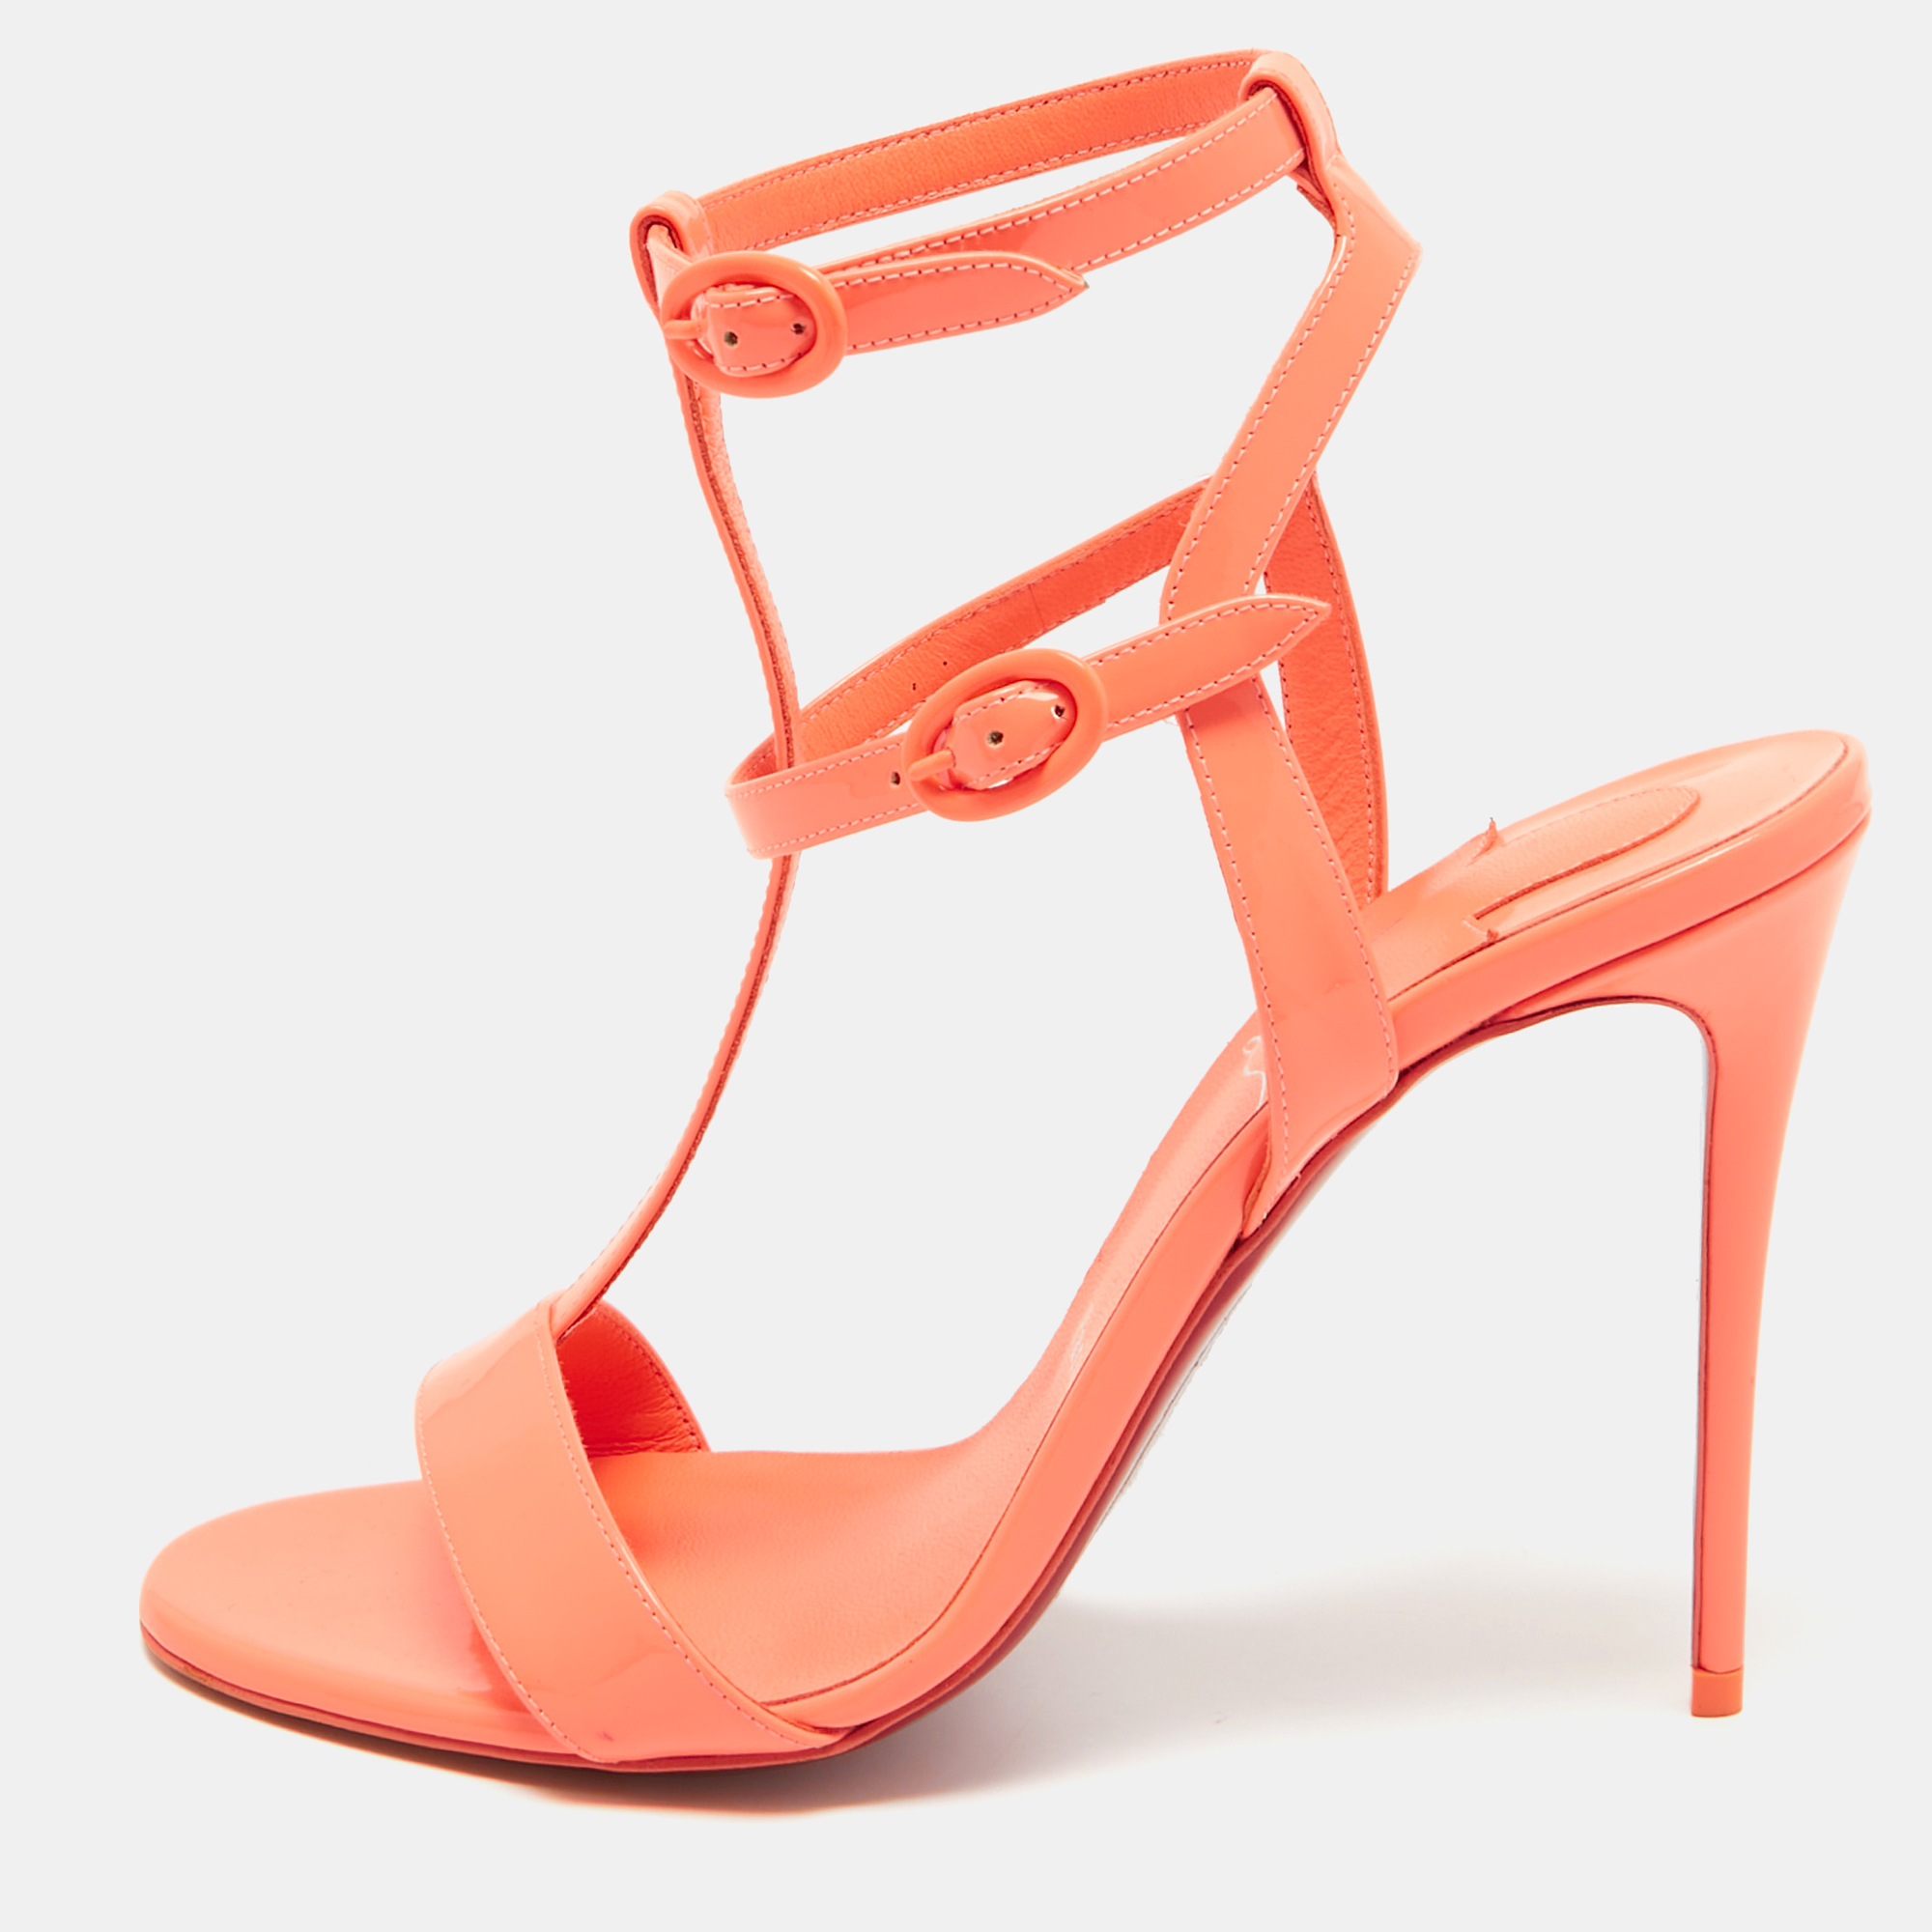 Christian louboutin peach pink patent leather mara sandals size 39